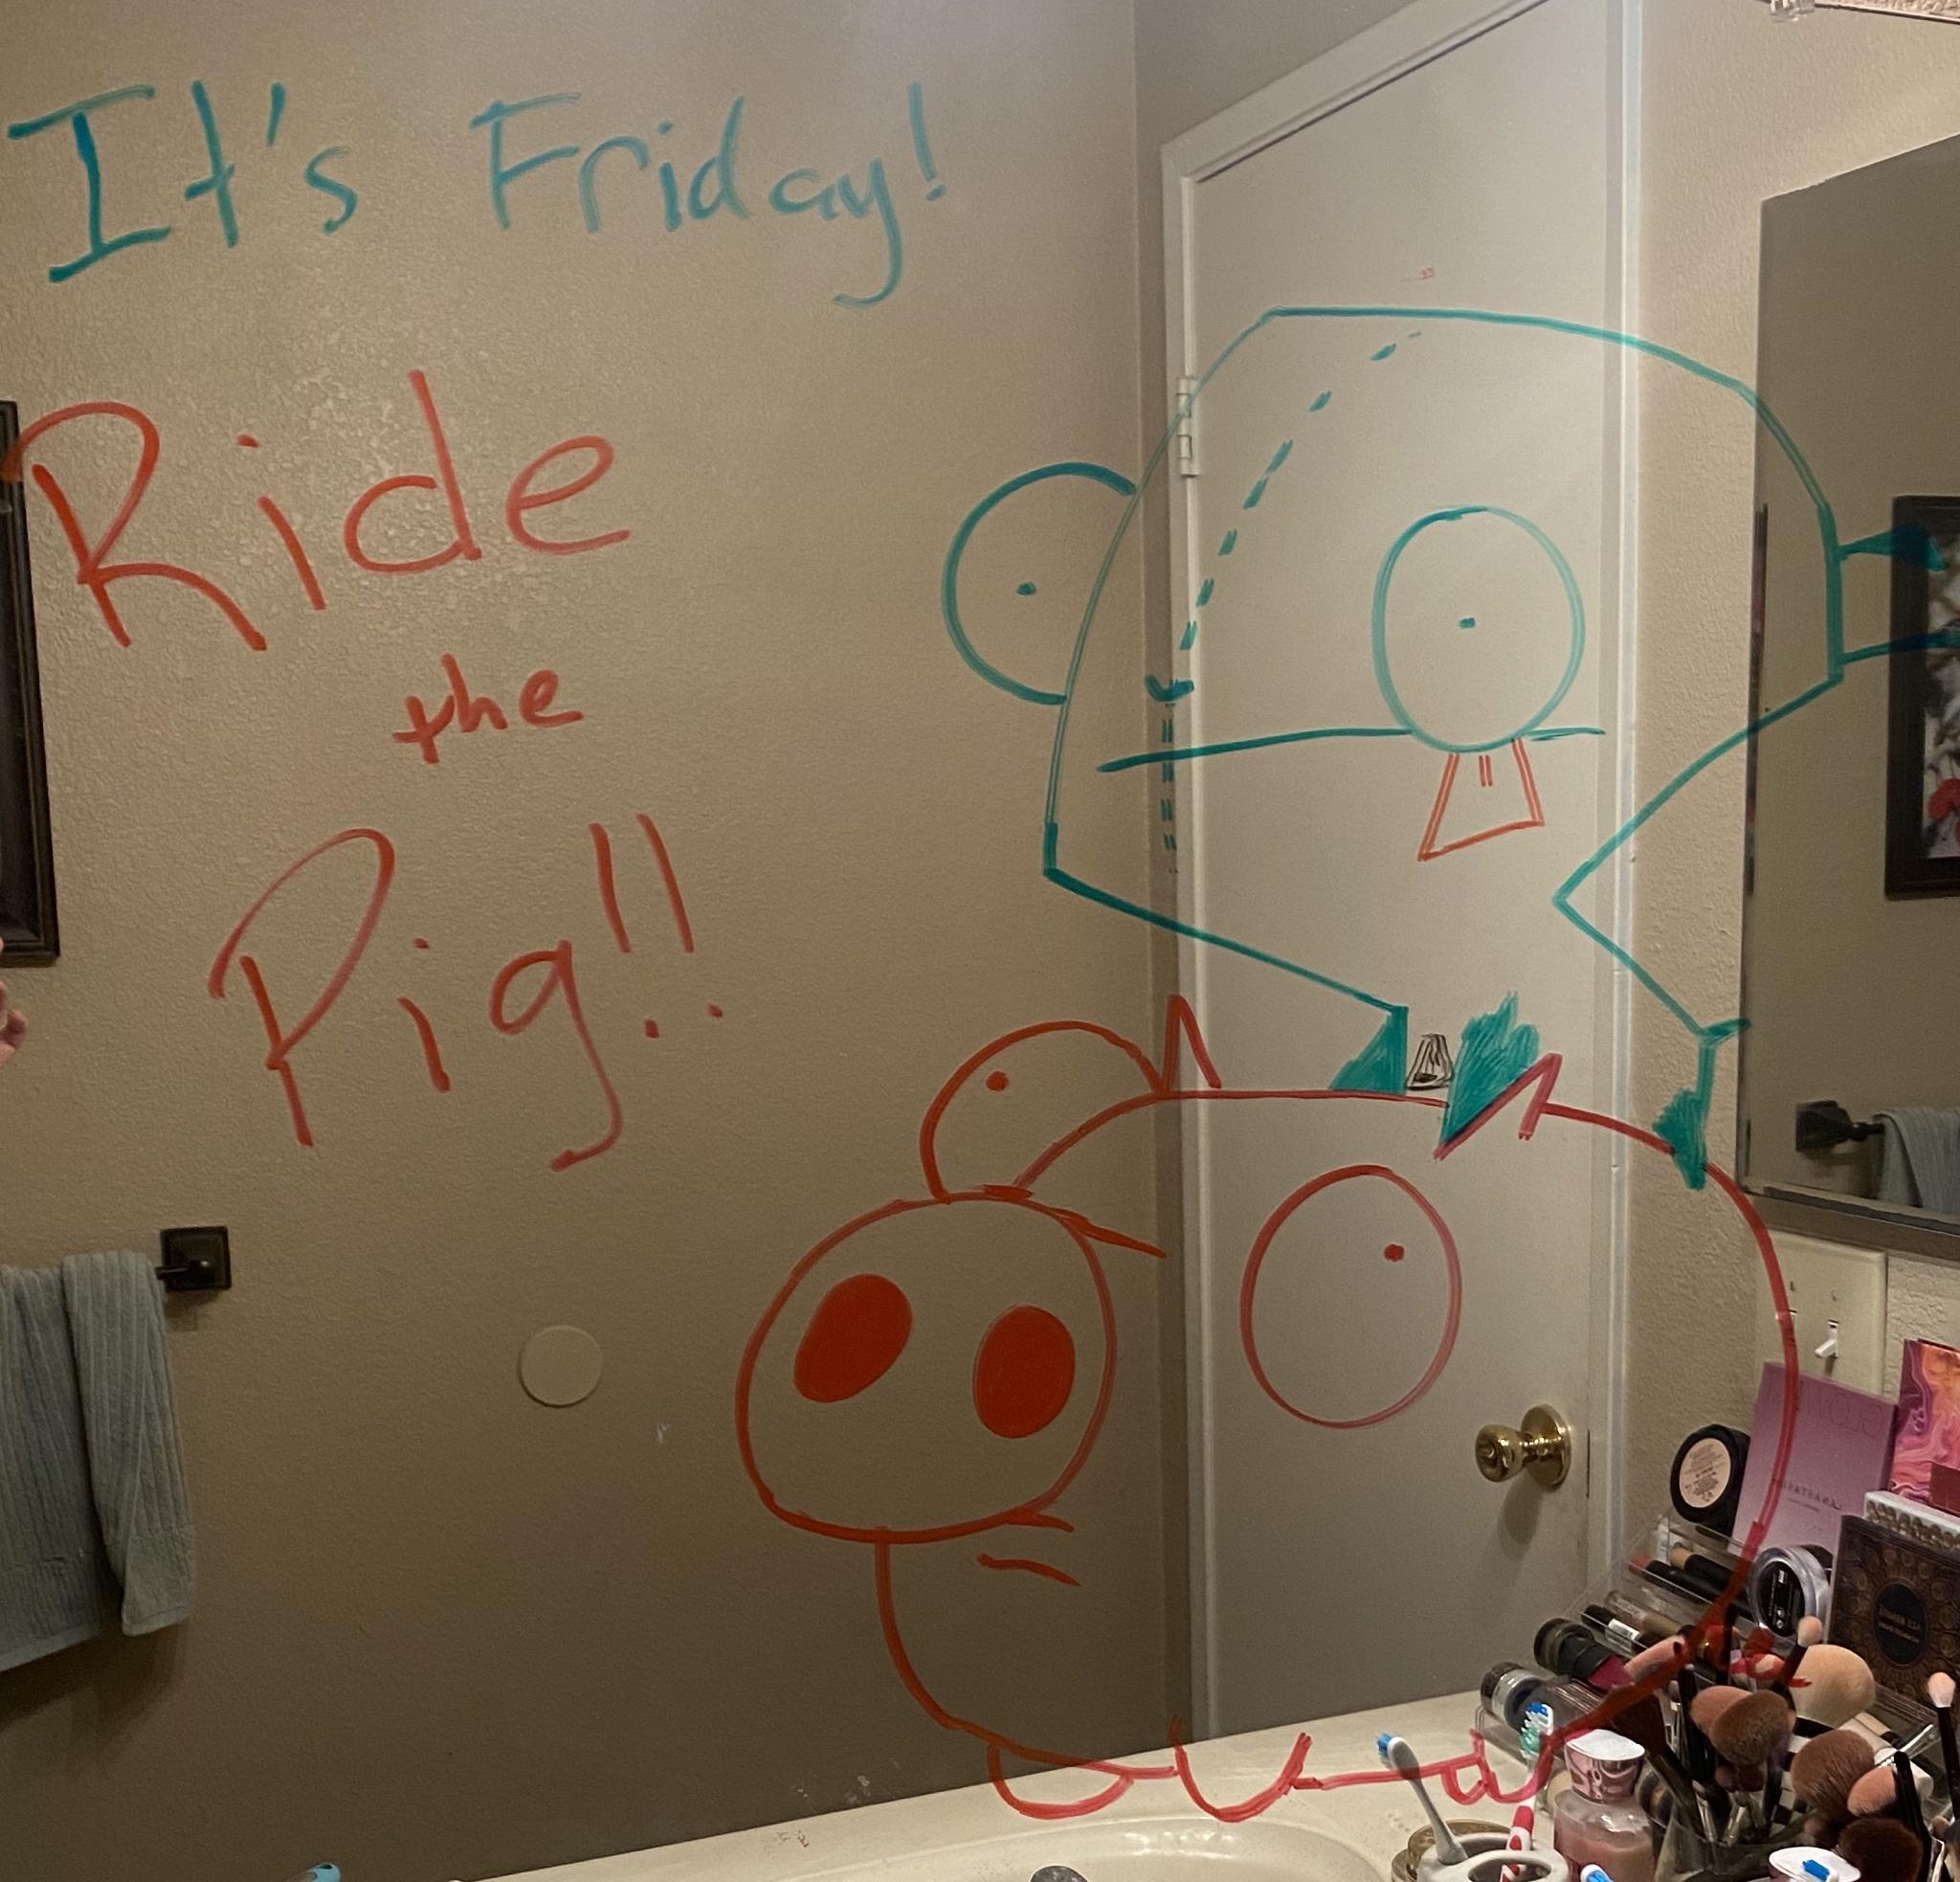 bathroom mirror illustrations - It's Friday! Ride e the . Pig!